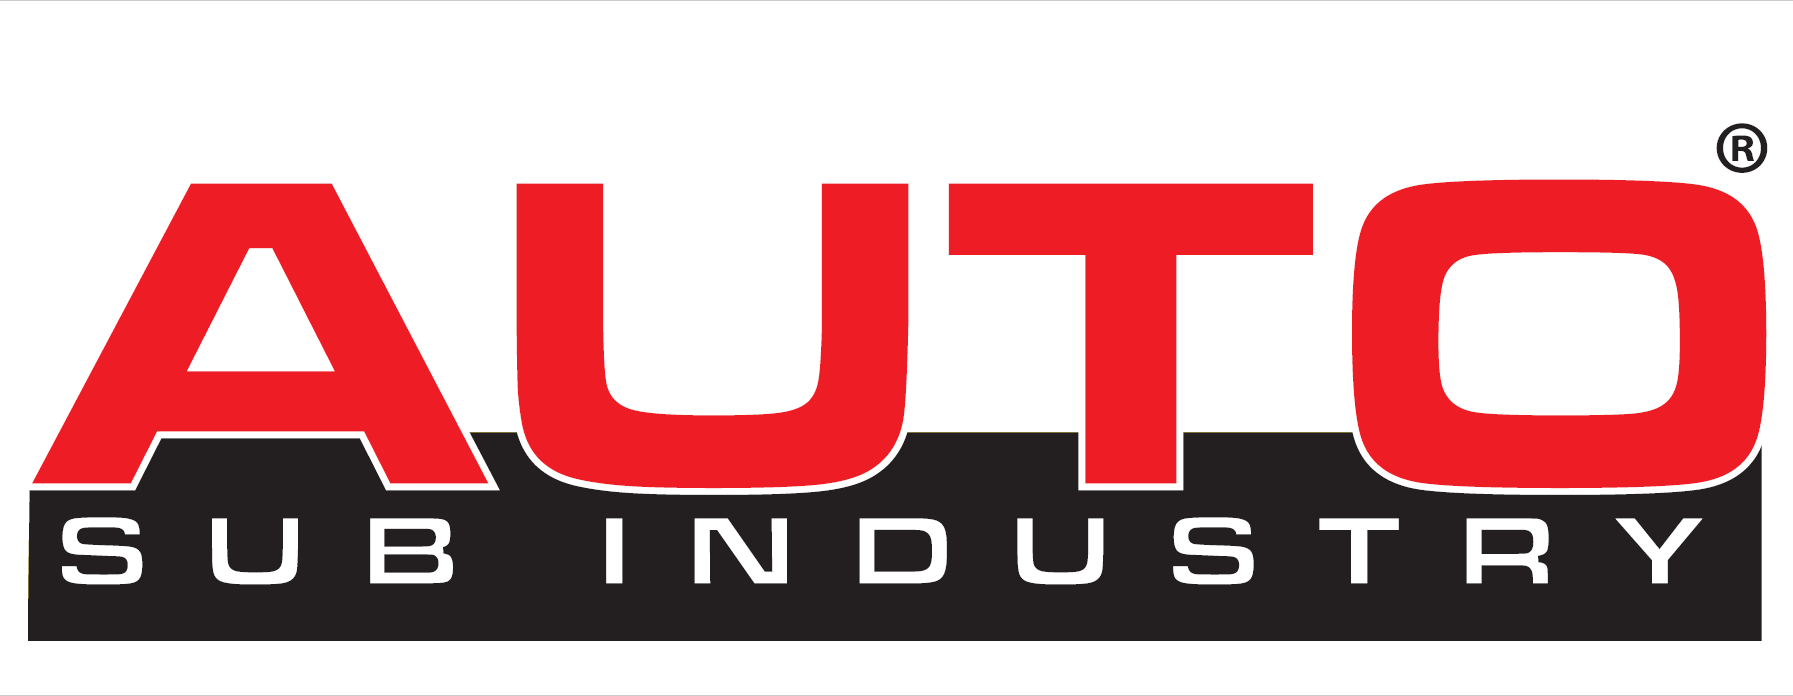 Logo Auto Sub Industry